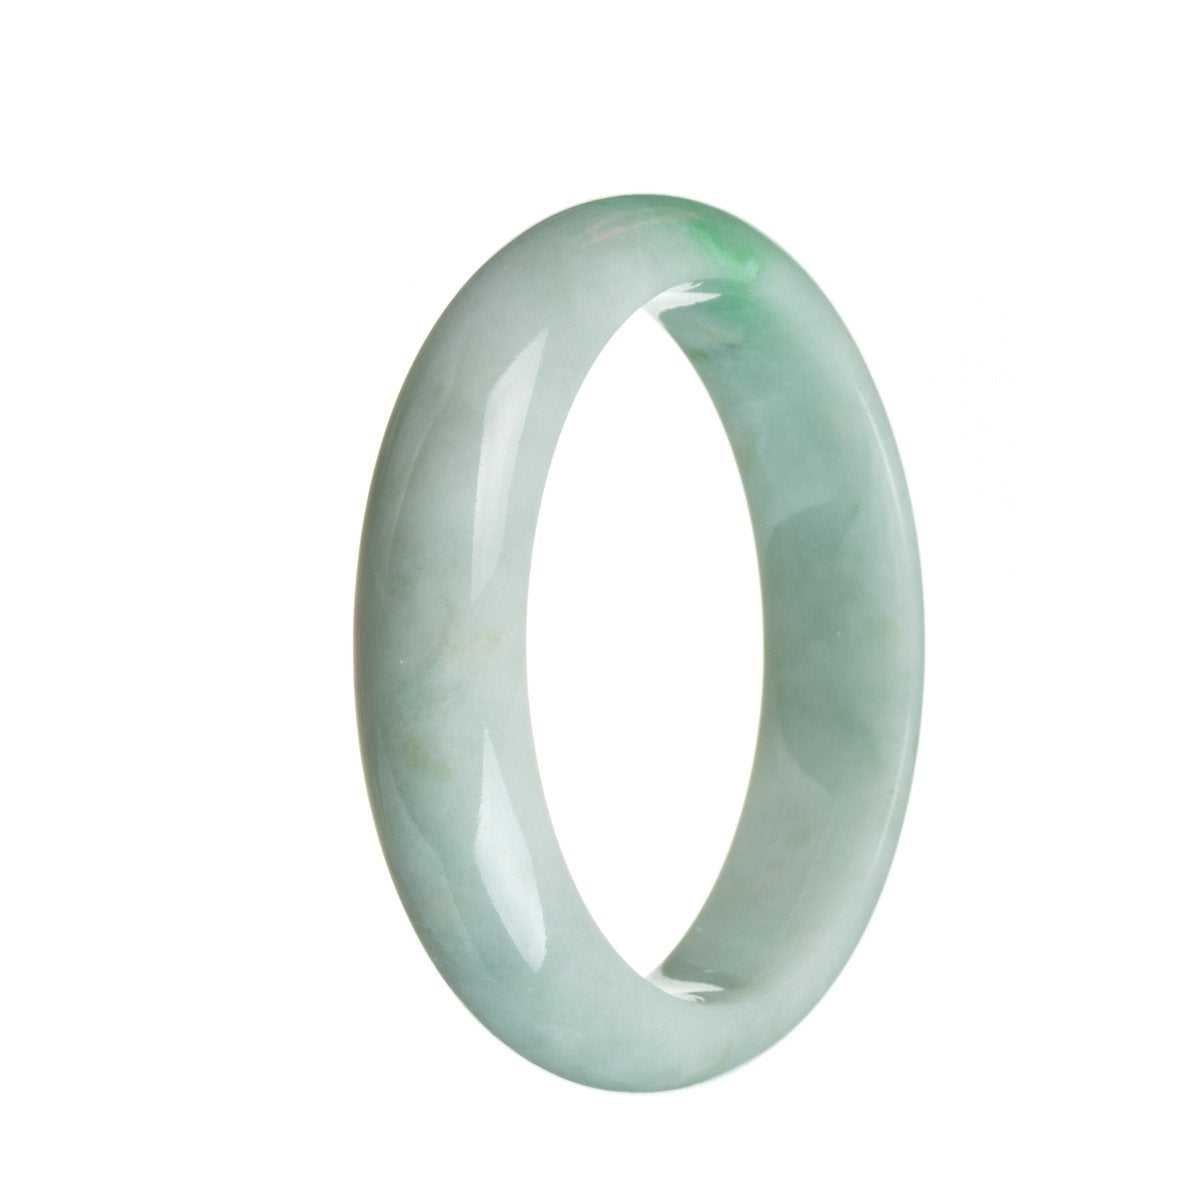 Authentic Grade A Green on white Jade Bangle Bracelet - 59mm Half Moon